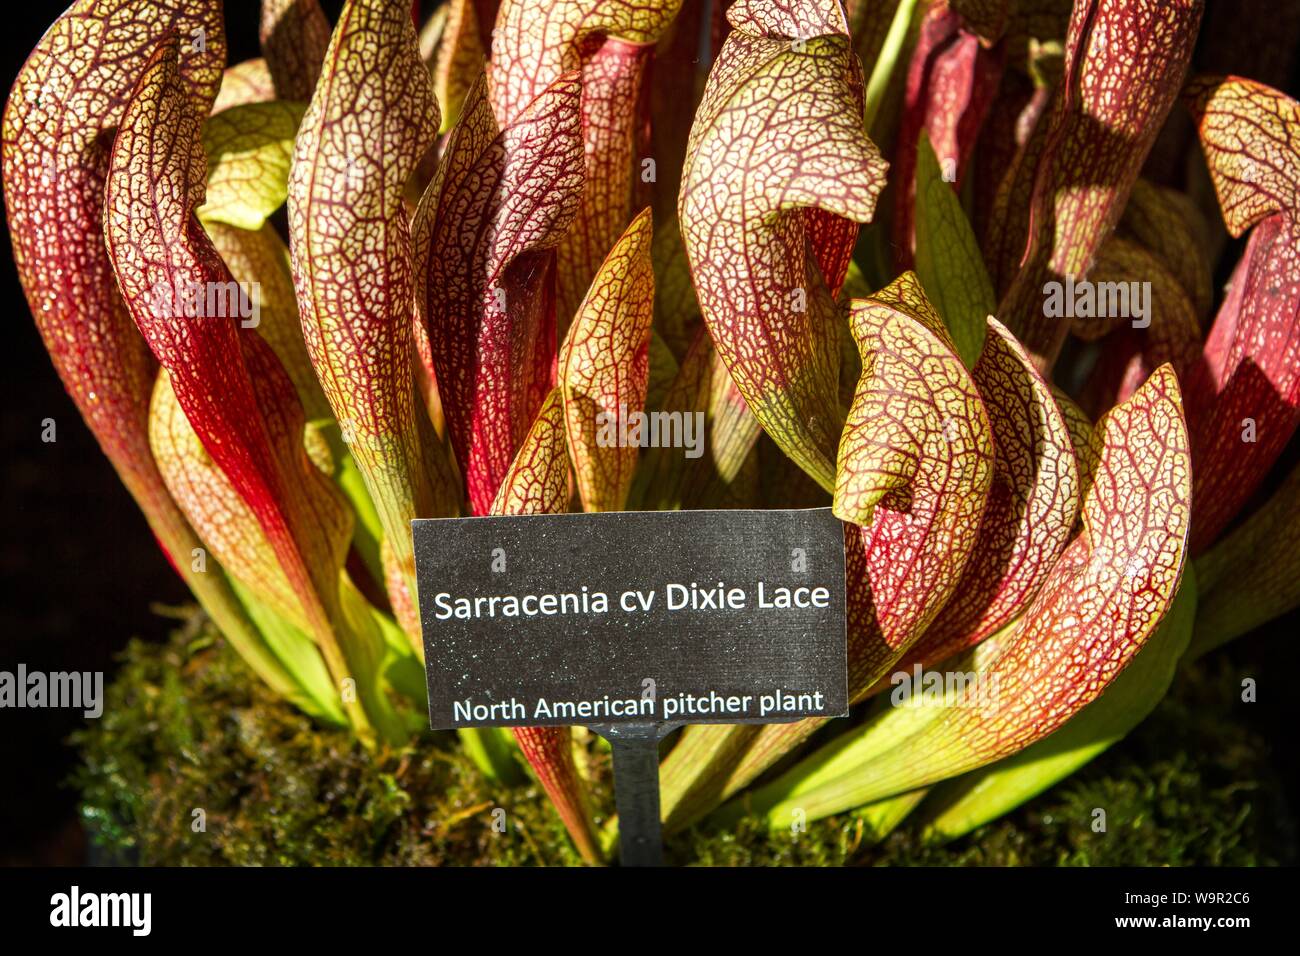 sarracenia cv dixie lace pitcher plant Stock Photo